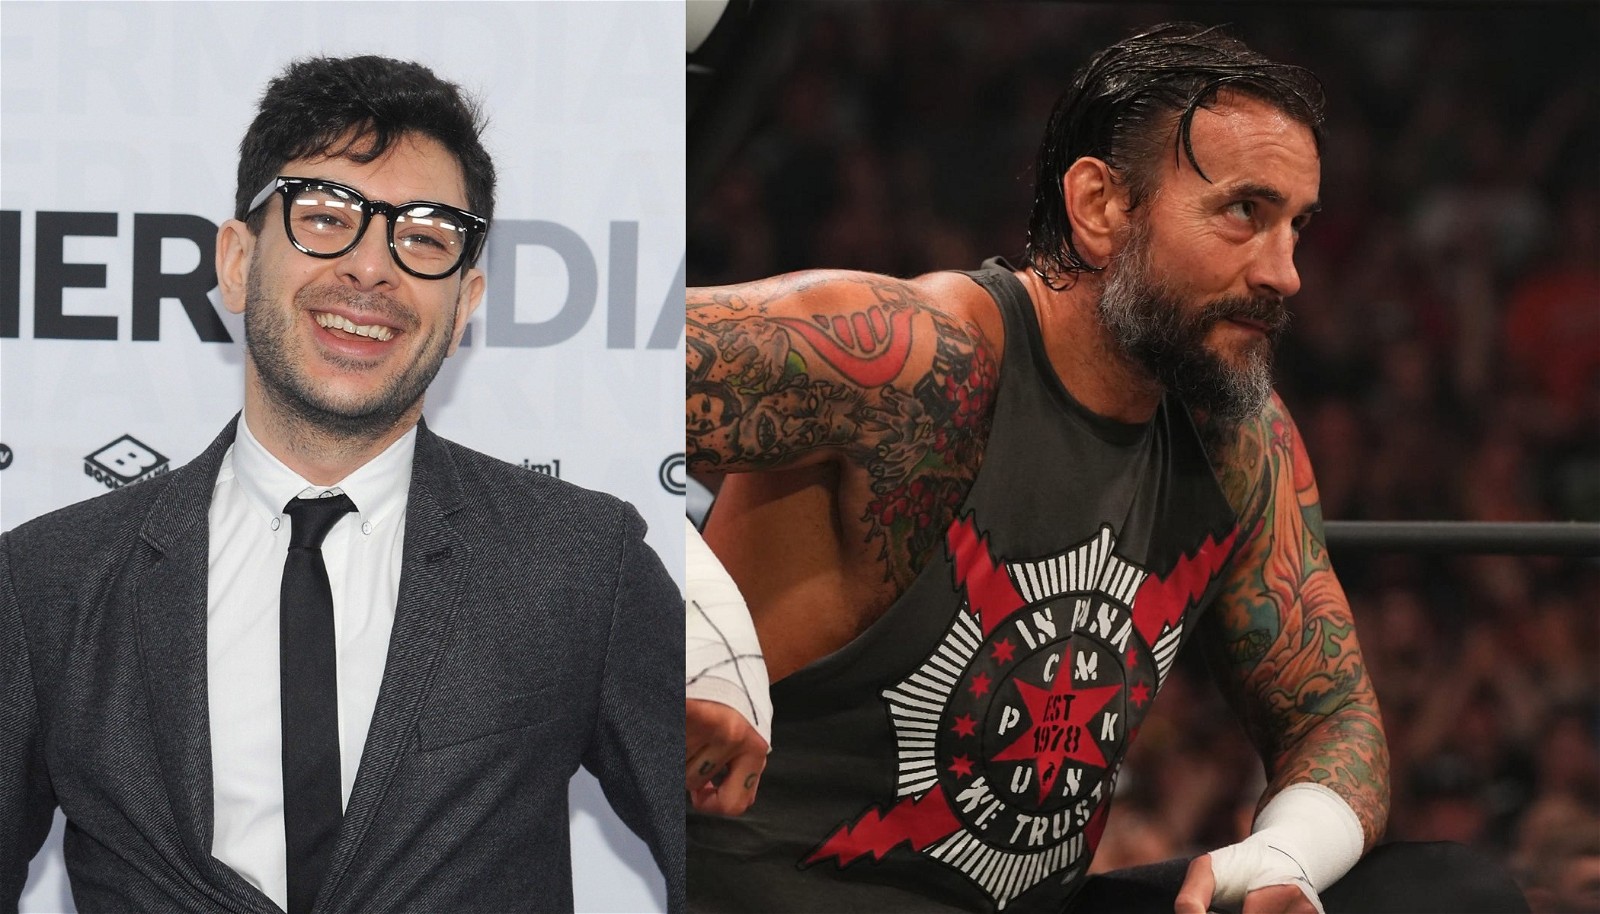 Tony Khan revealed that CM Punk's backstage altercation "endangered people"